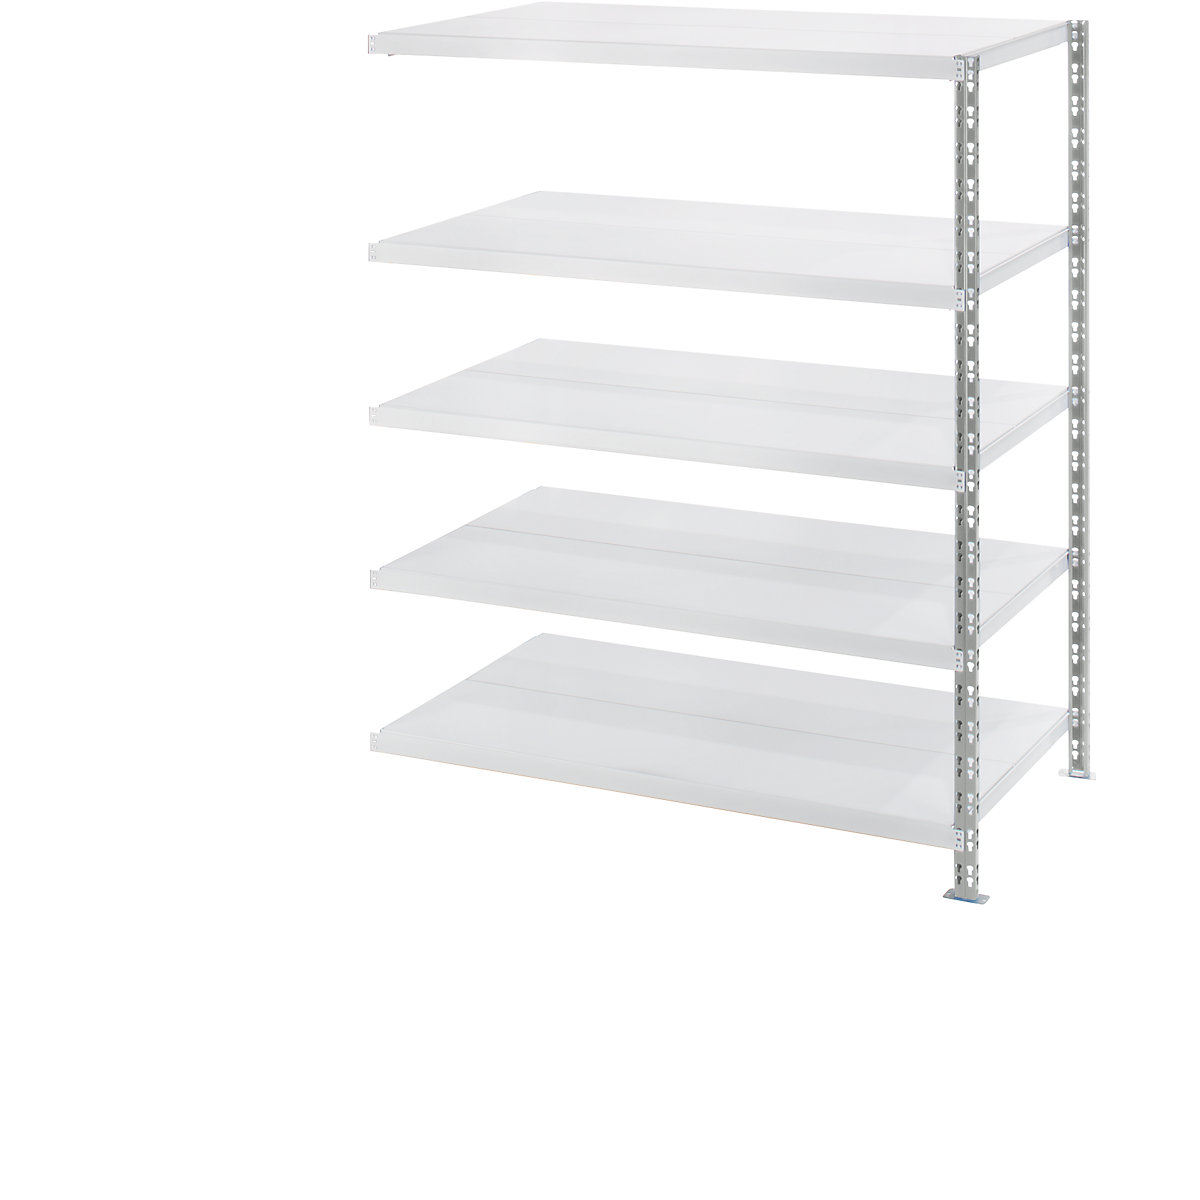 Wide span shelf unit with sheet steel shelves, depth 800 mm, extension shelf unit, HxW 1820 x 1525 mm